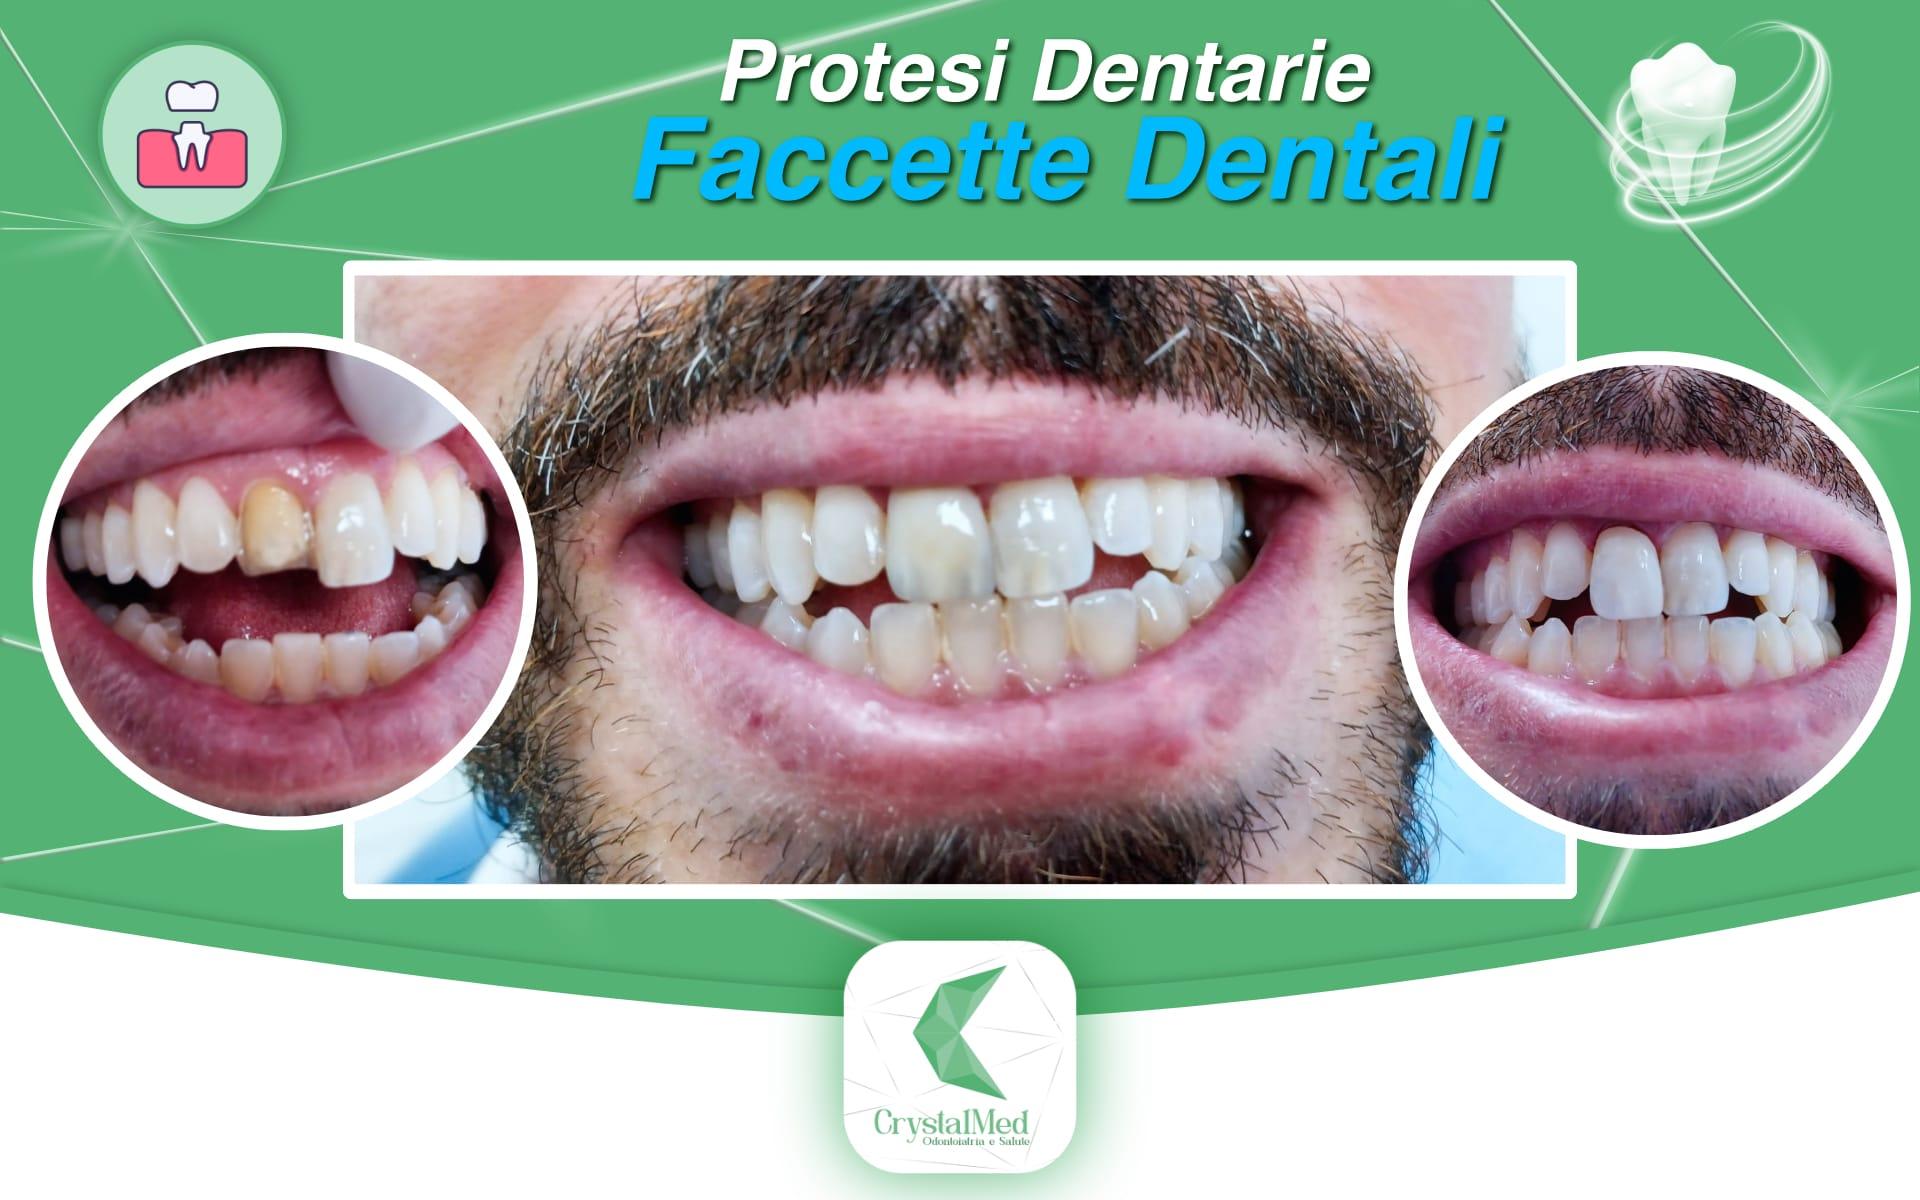 Protesi Dentarie - Faccette Dentali